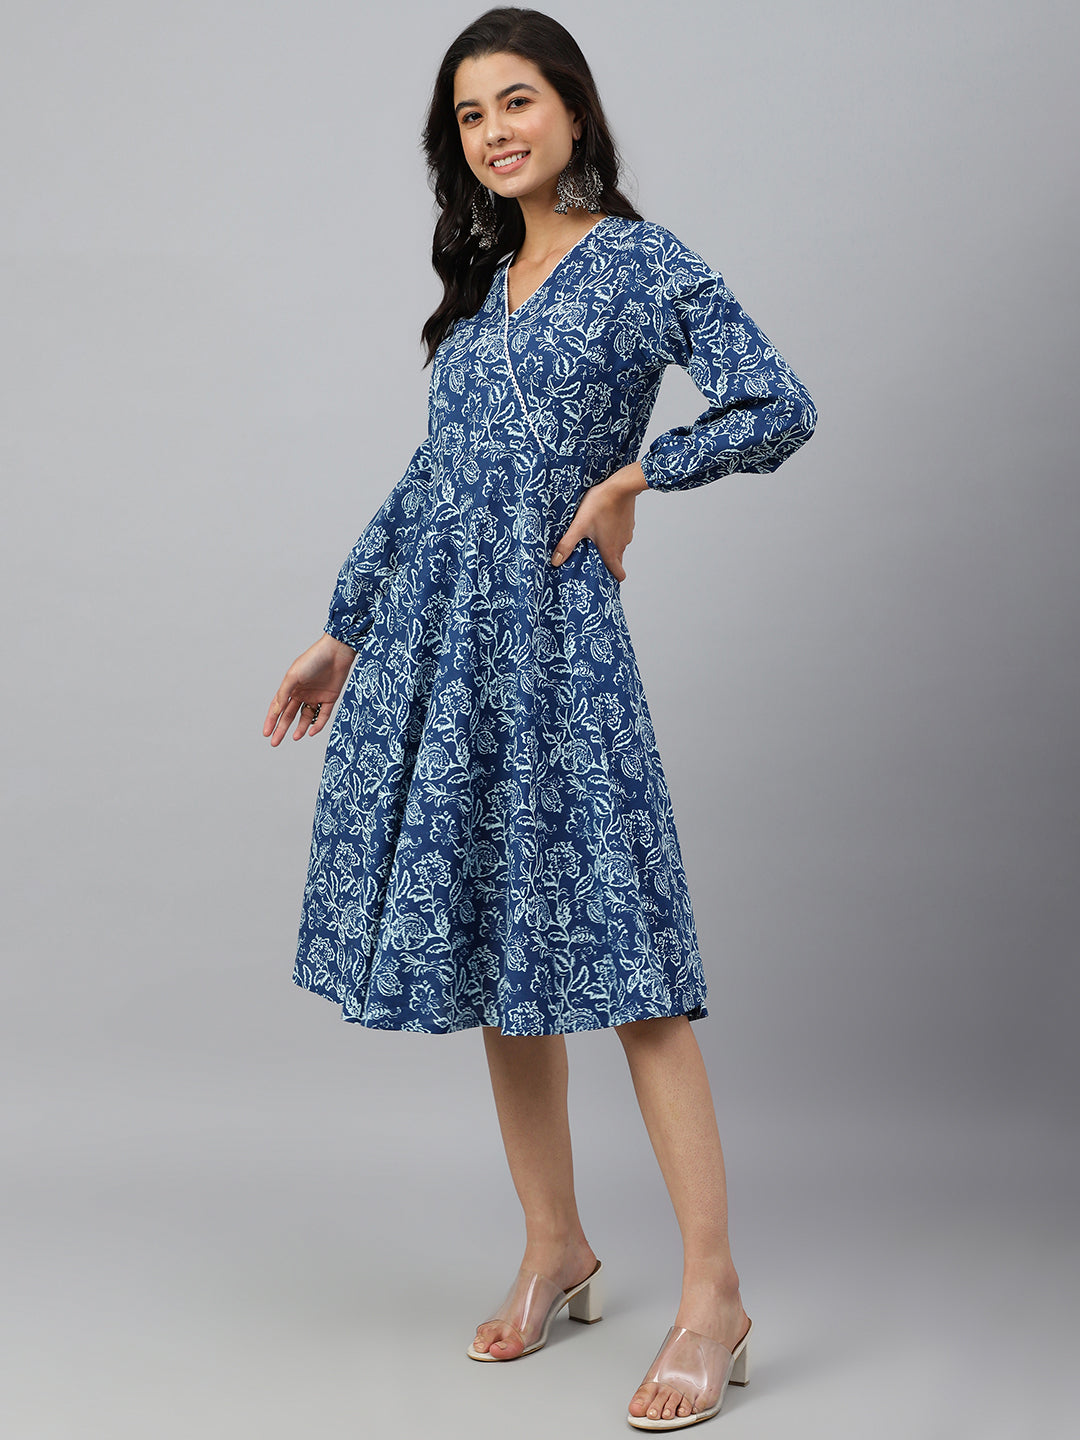 Women's Floral Printed Navy Blue Cotton Dress - Janasya